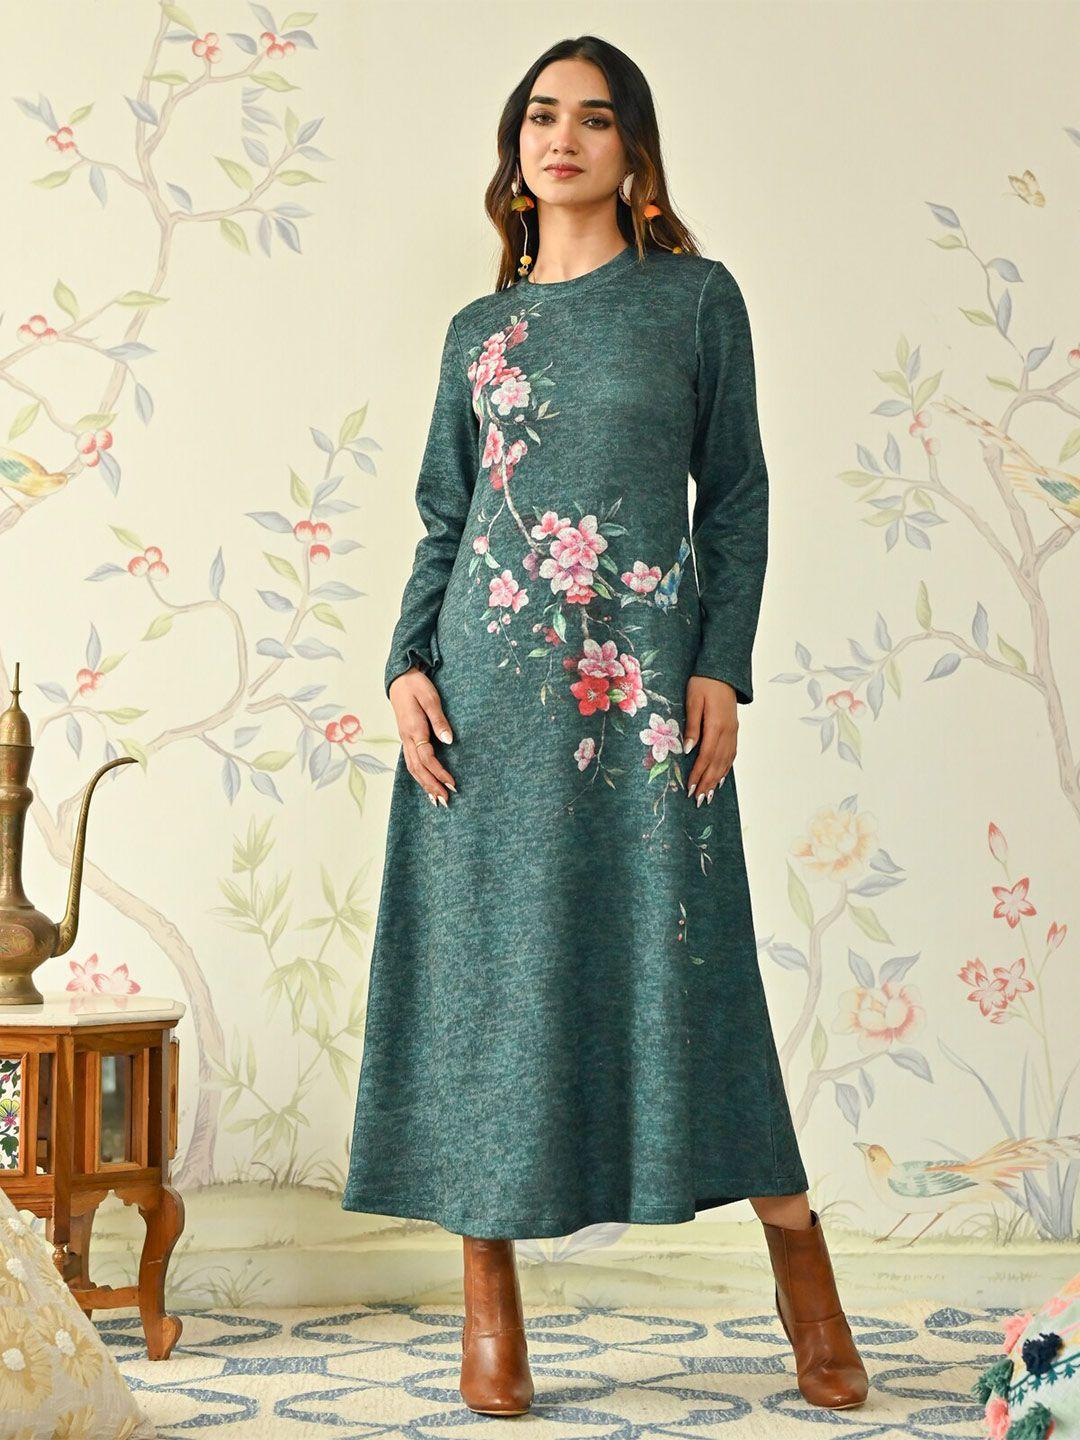 rustorange floral printed a-line midi dress